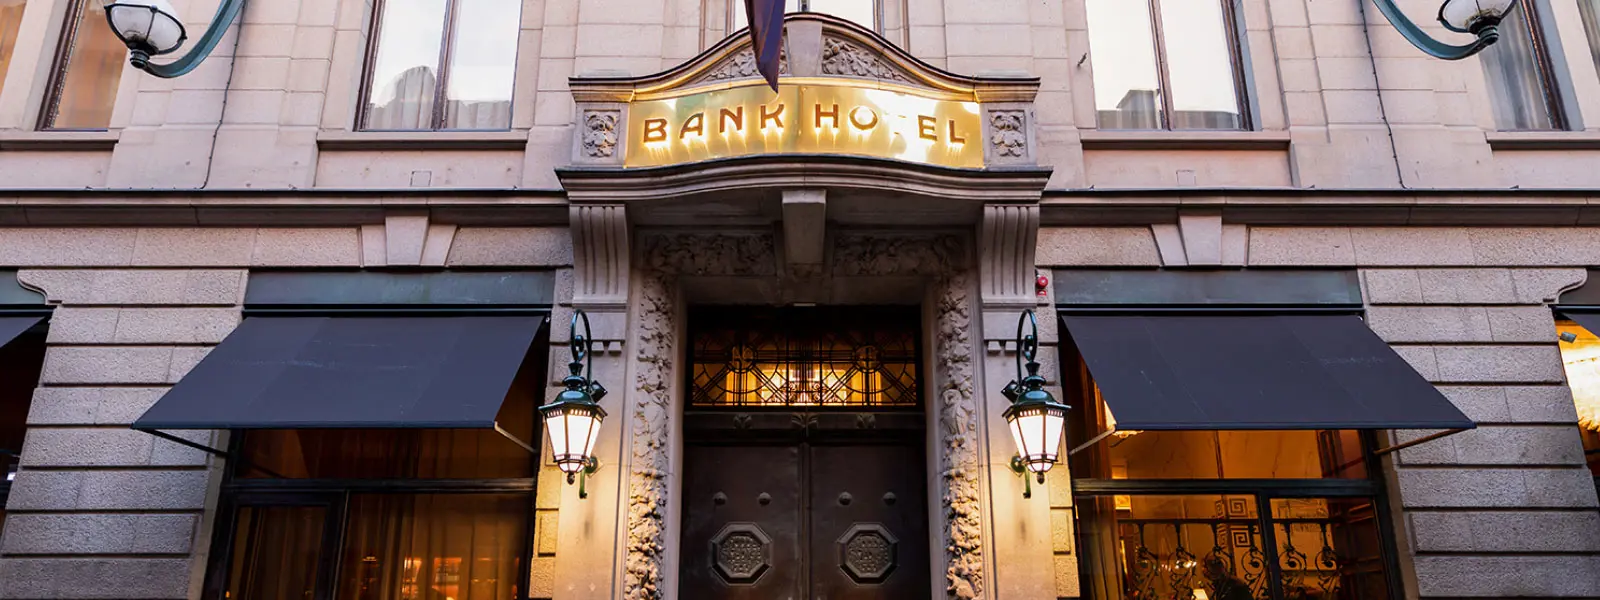 Bank Hotel